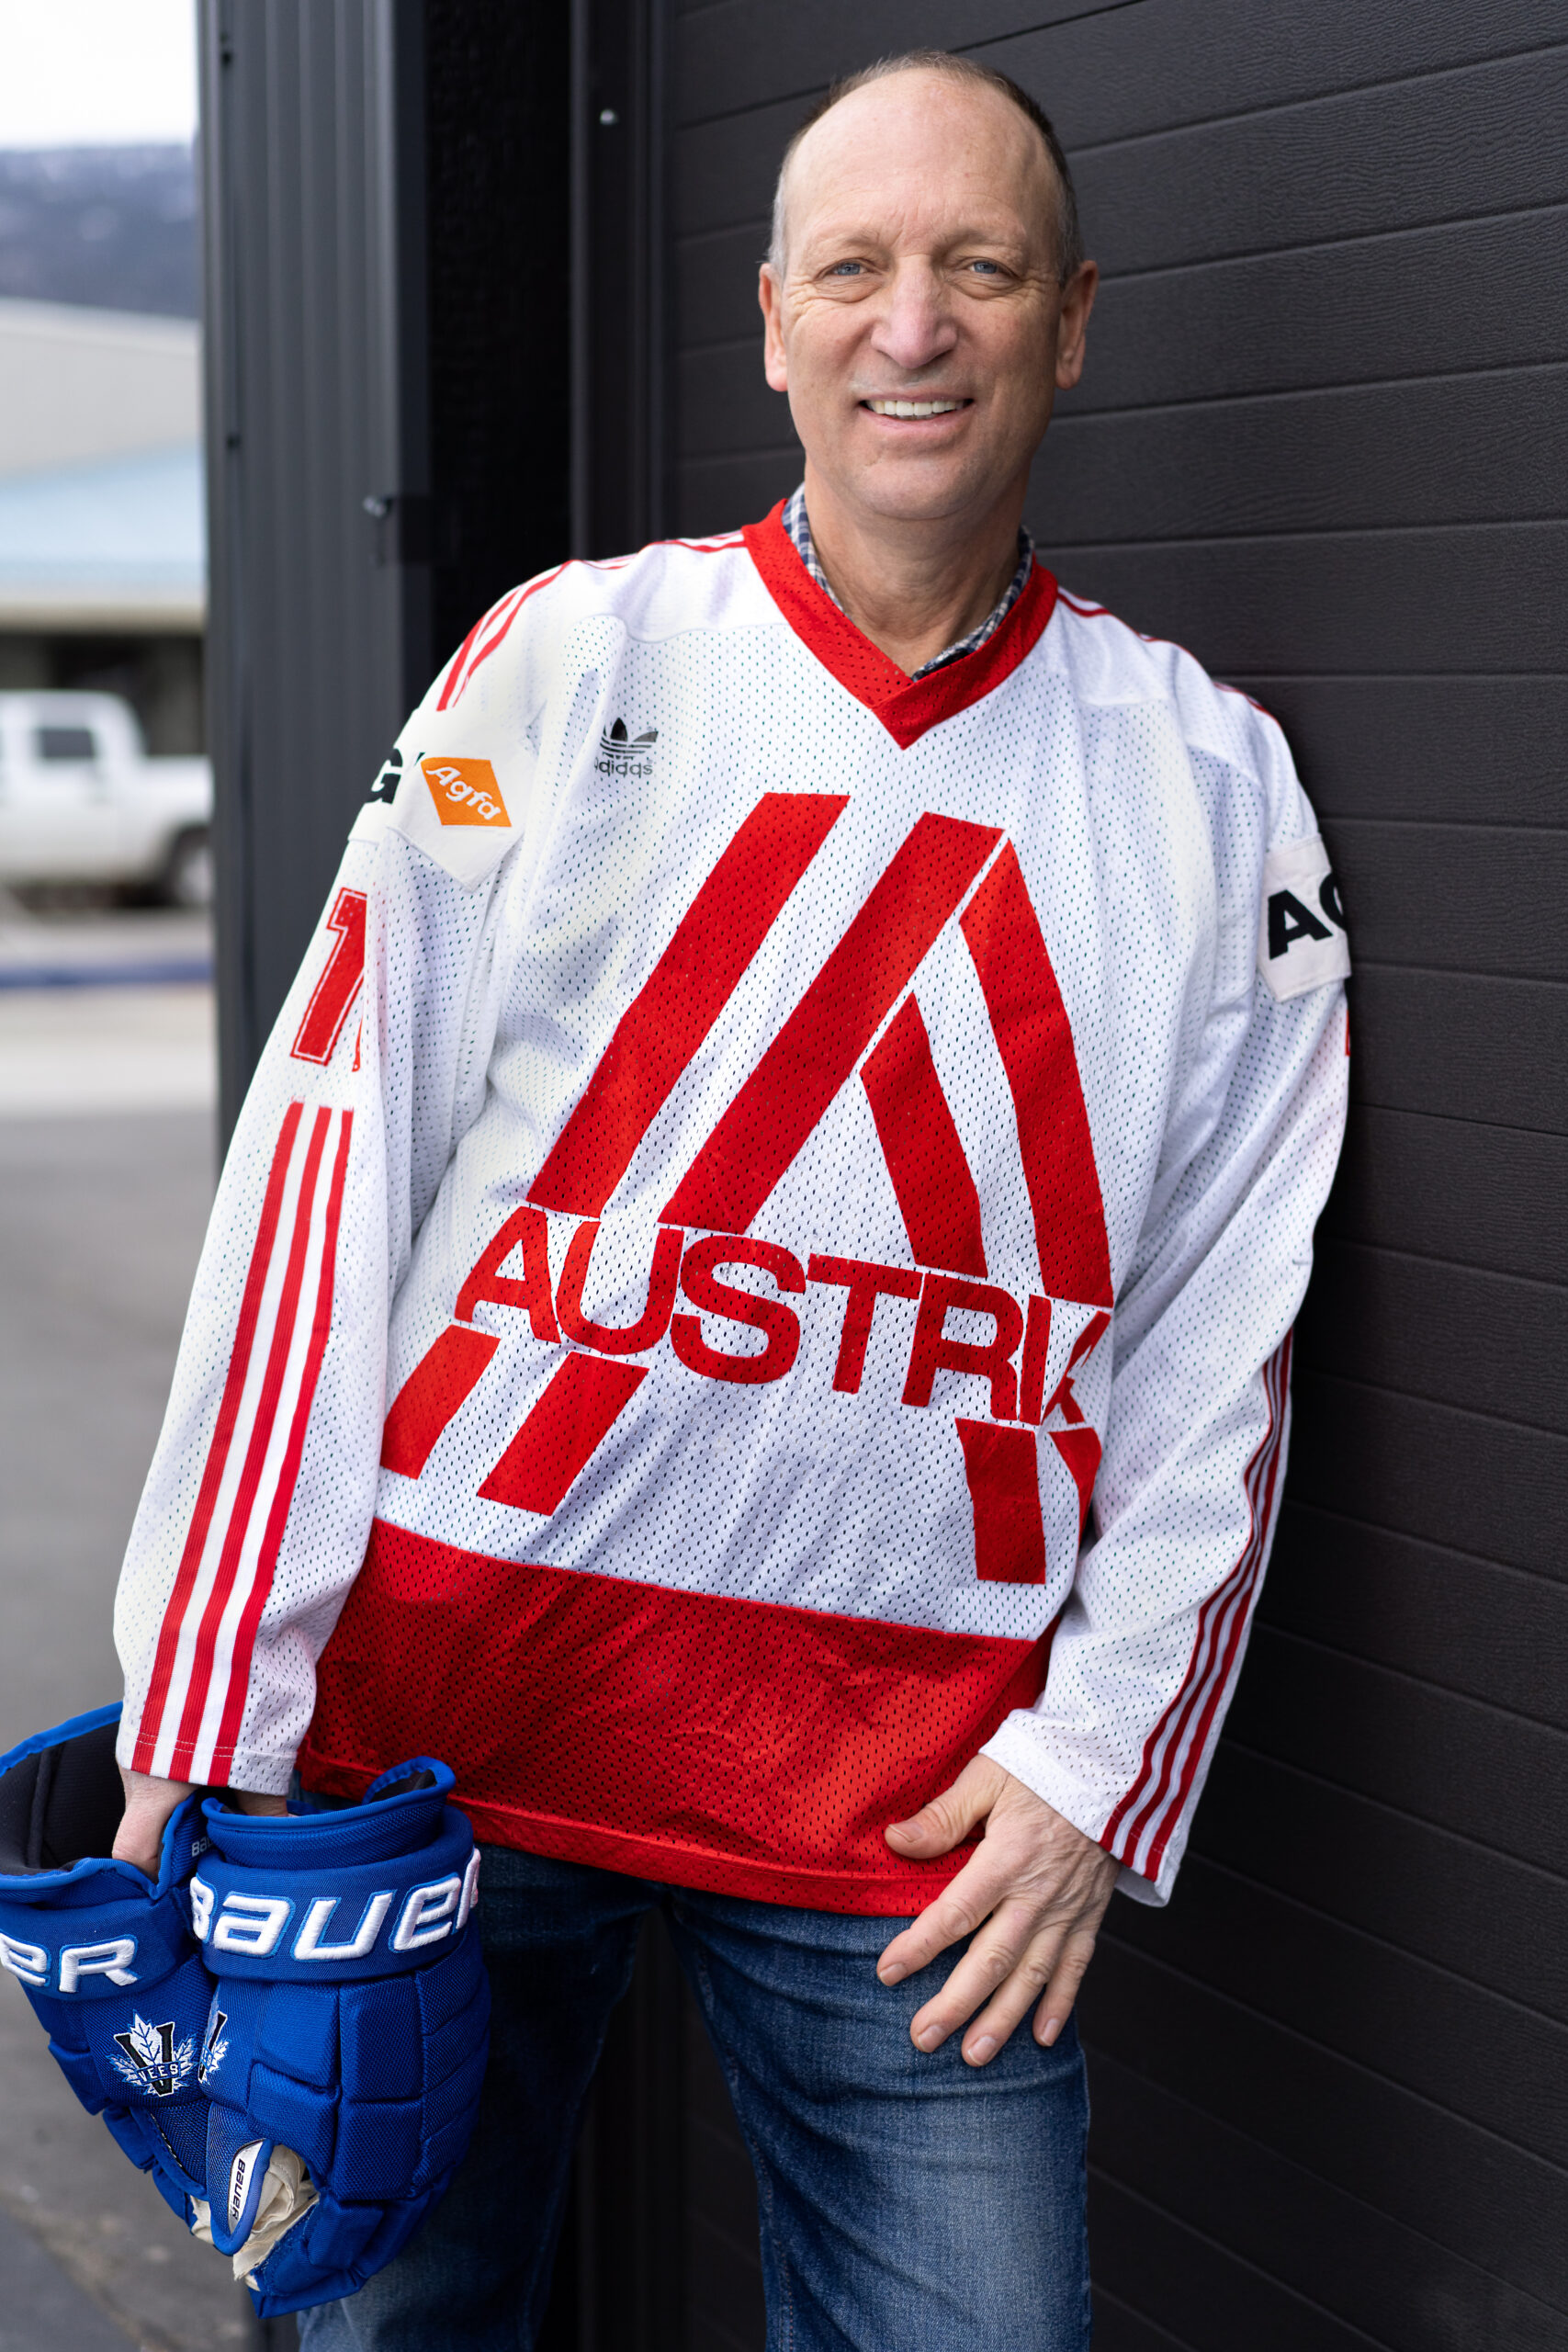 Ed Lebler poses in his Austria hockey gear